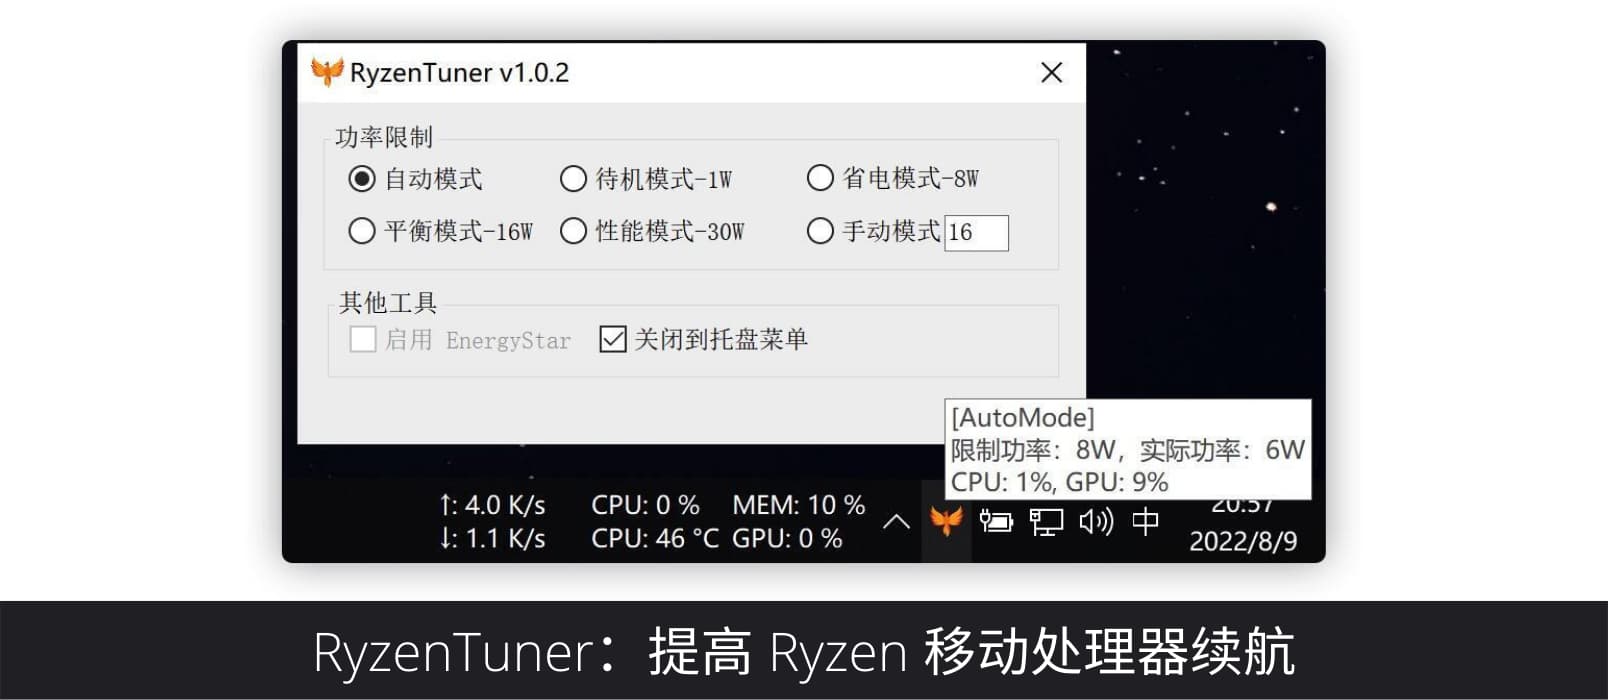 RyzenTuner - 提高 Ryzen 移动处理器续航[Windows]